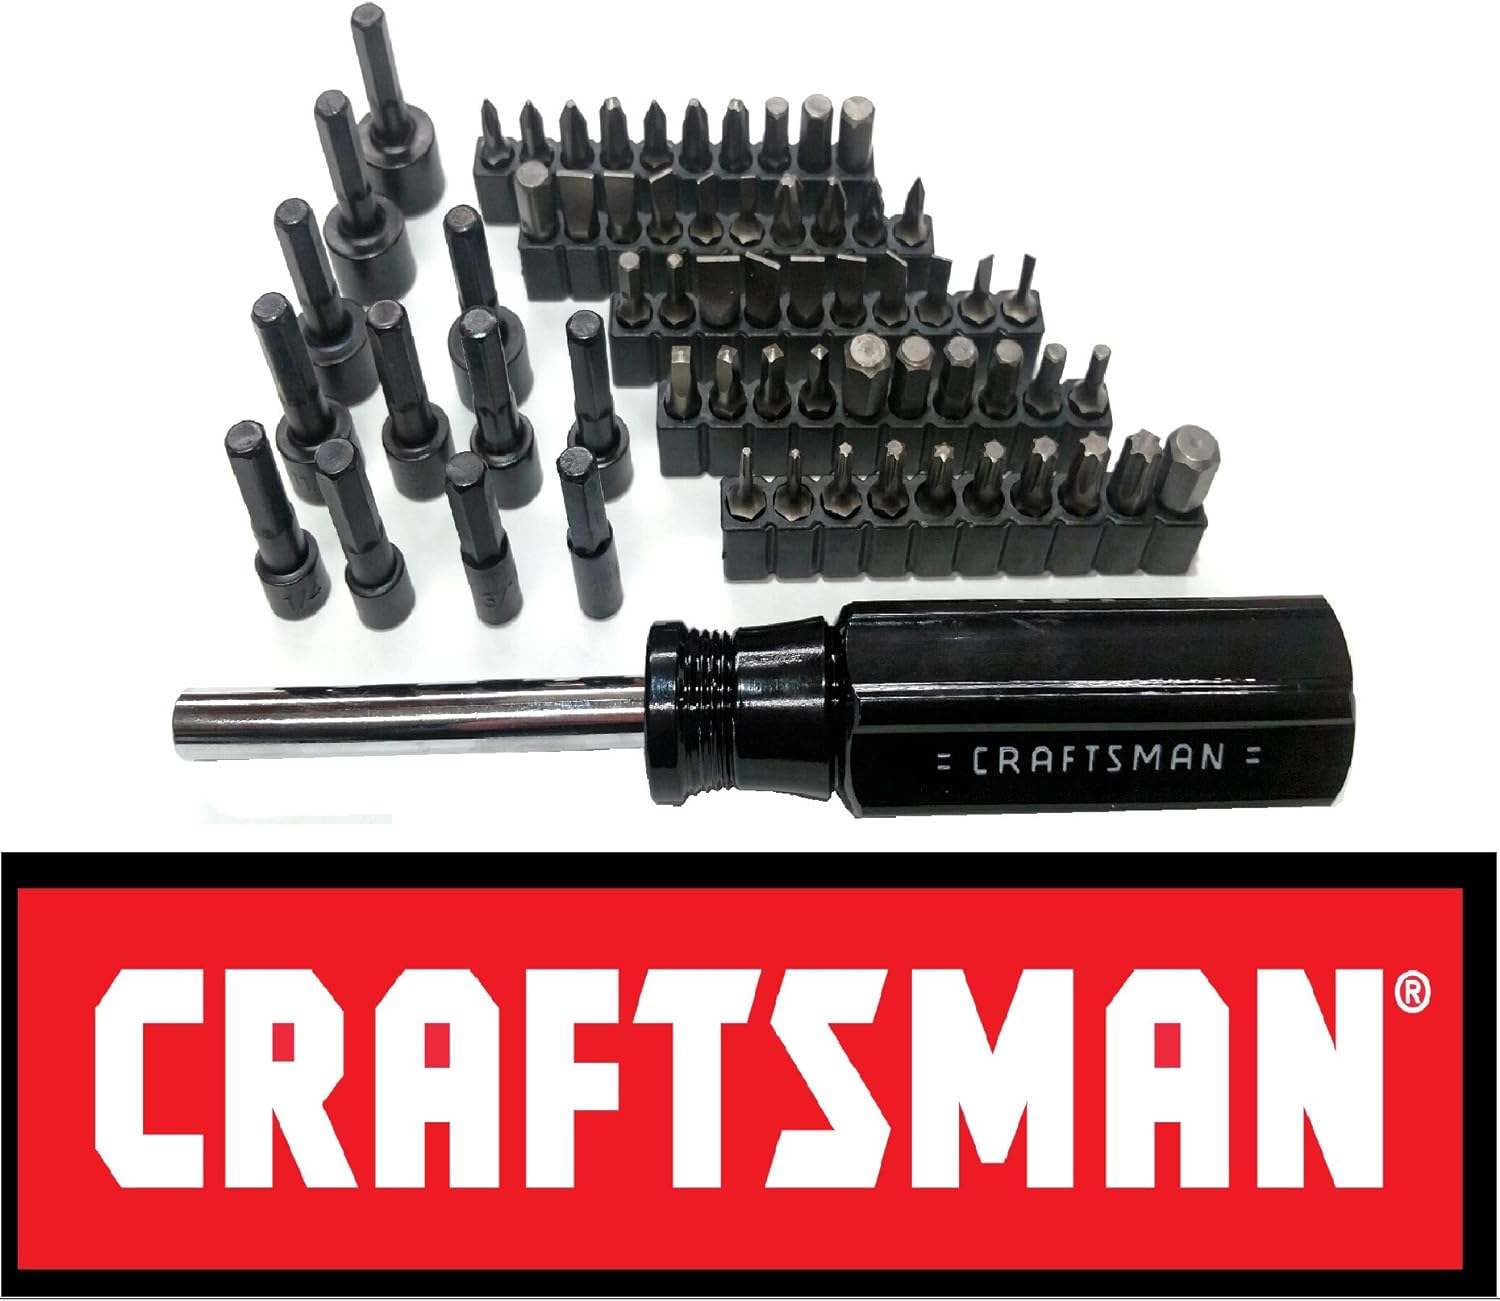 Craftsman 63 Pc Piece Bit Nut Driver Set + Magnetic Screwdriver Handle 43373